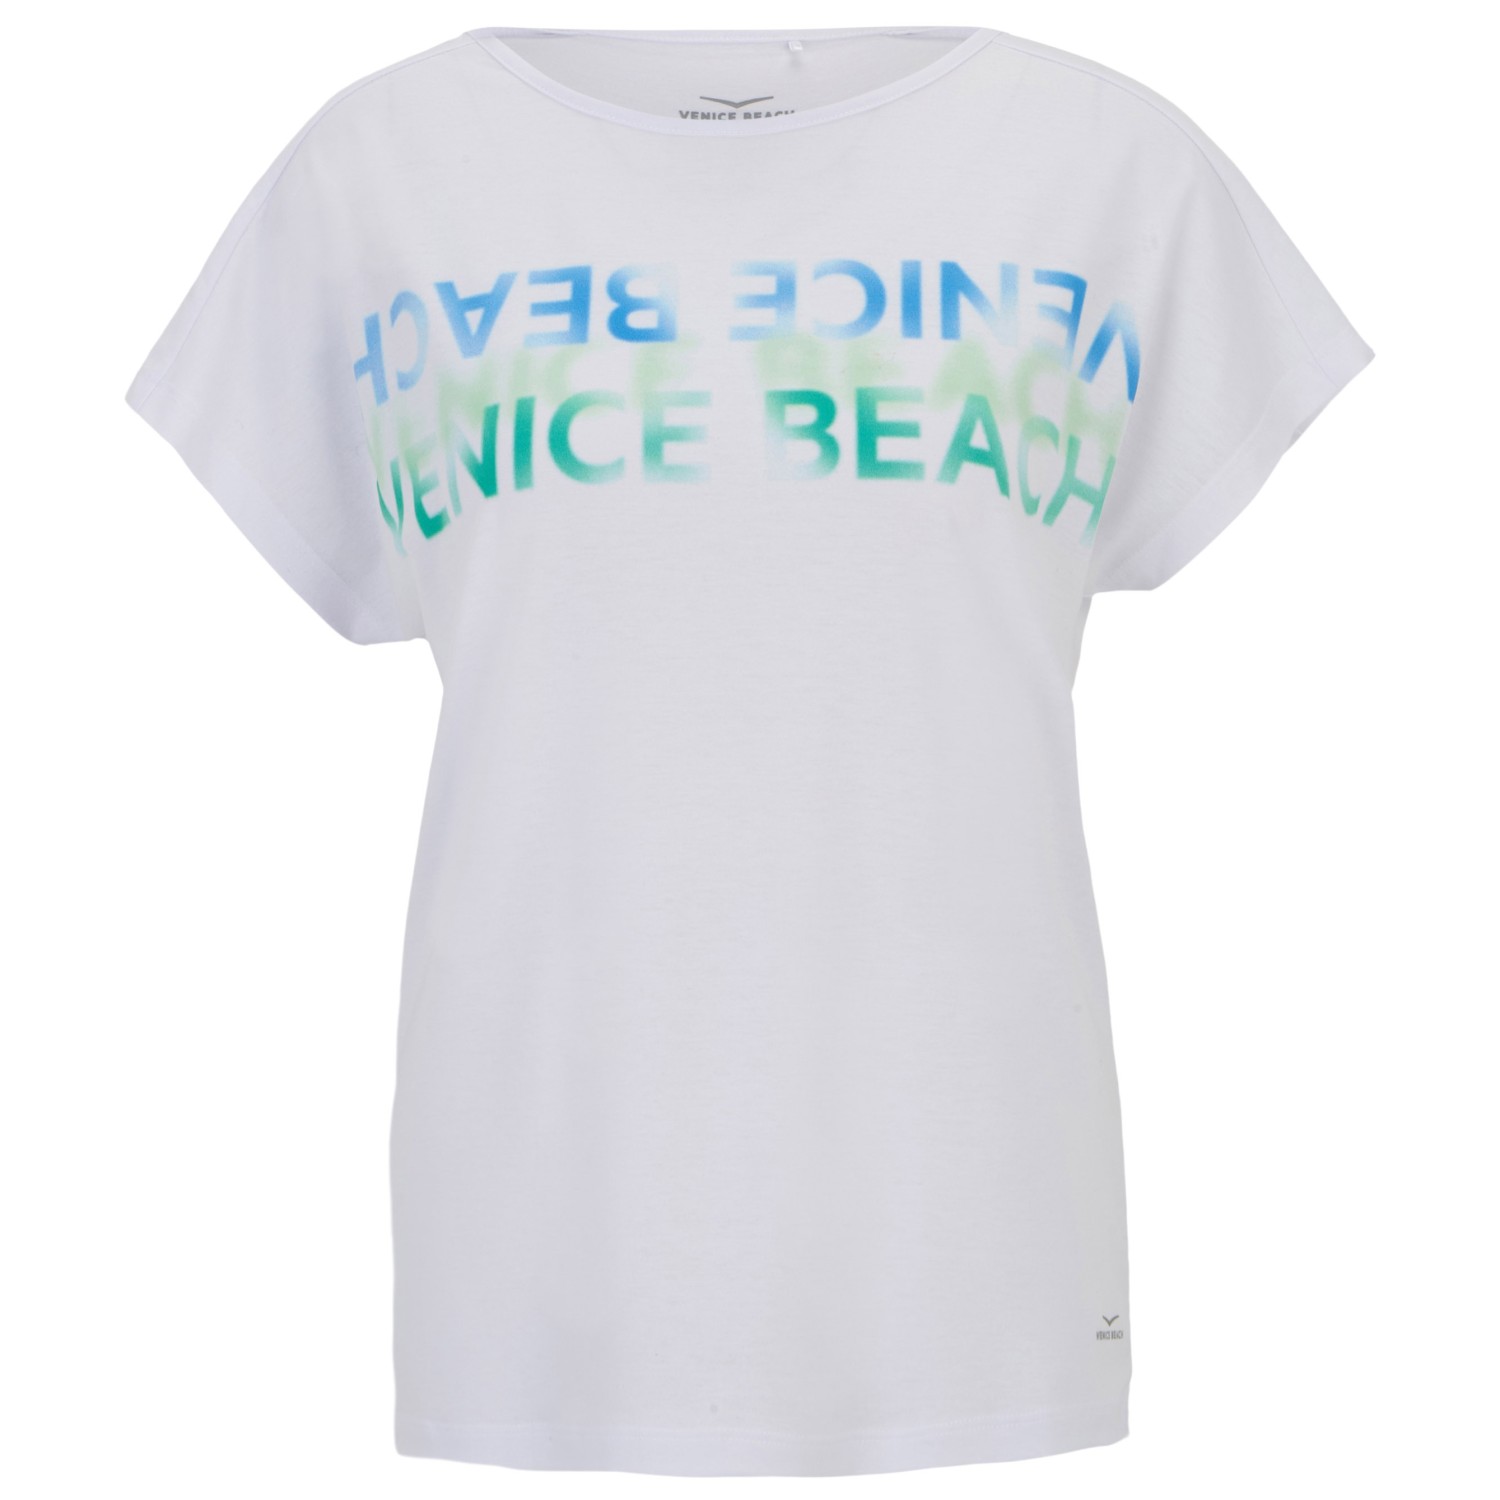 Функциональная рубашка Venice Beach Women's Tia Drytivity Cotton Touch Light T Shirt, белый